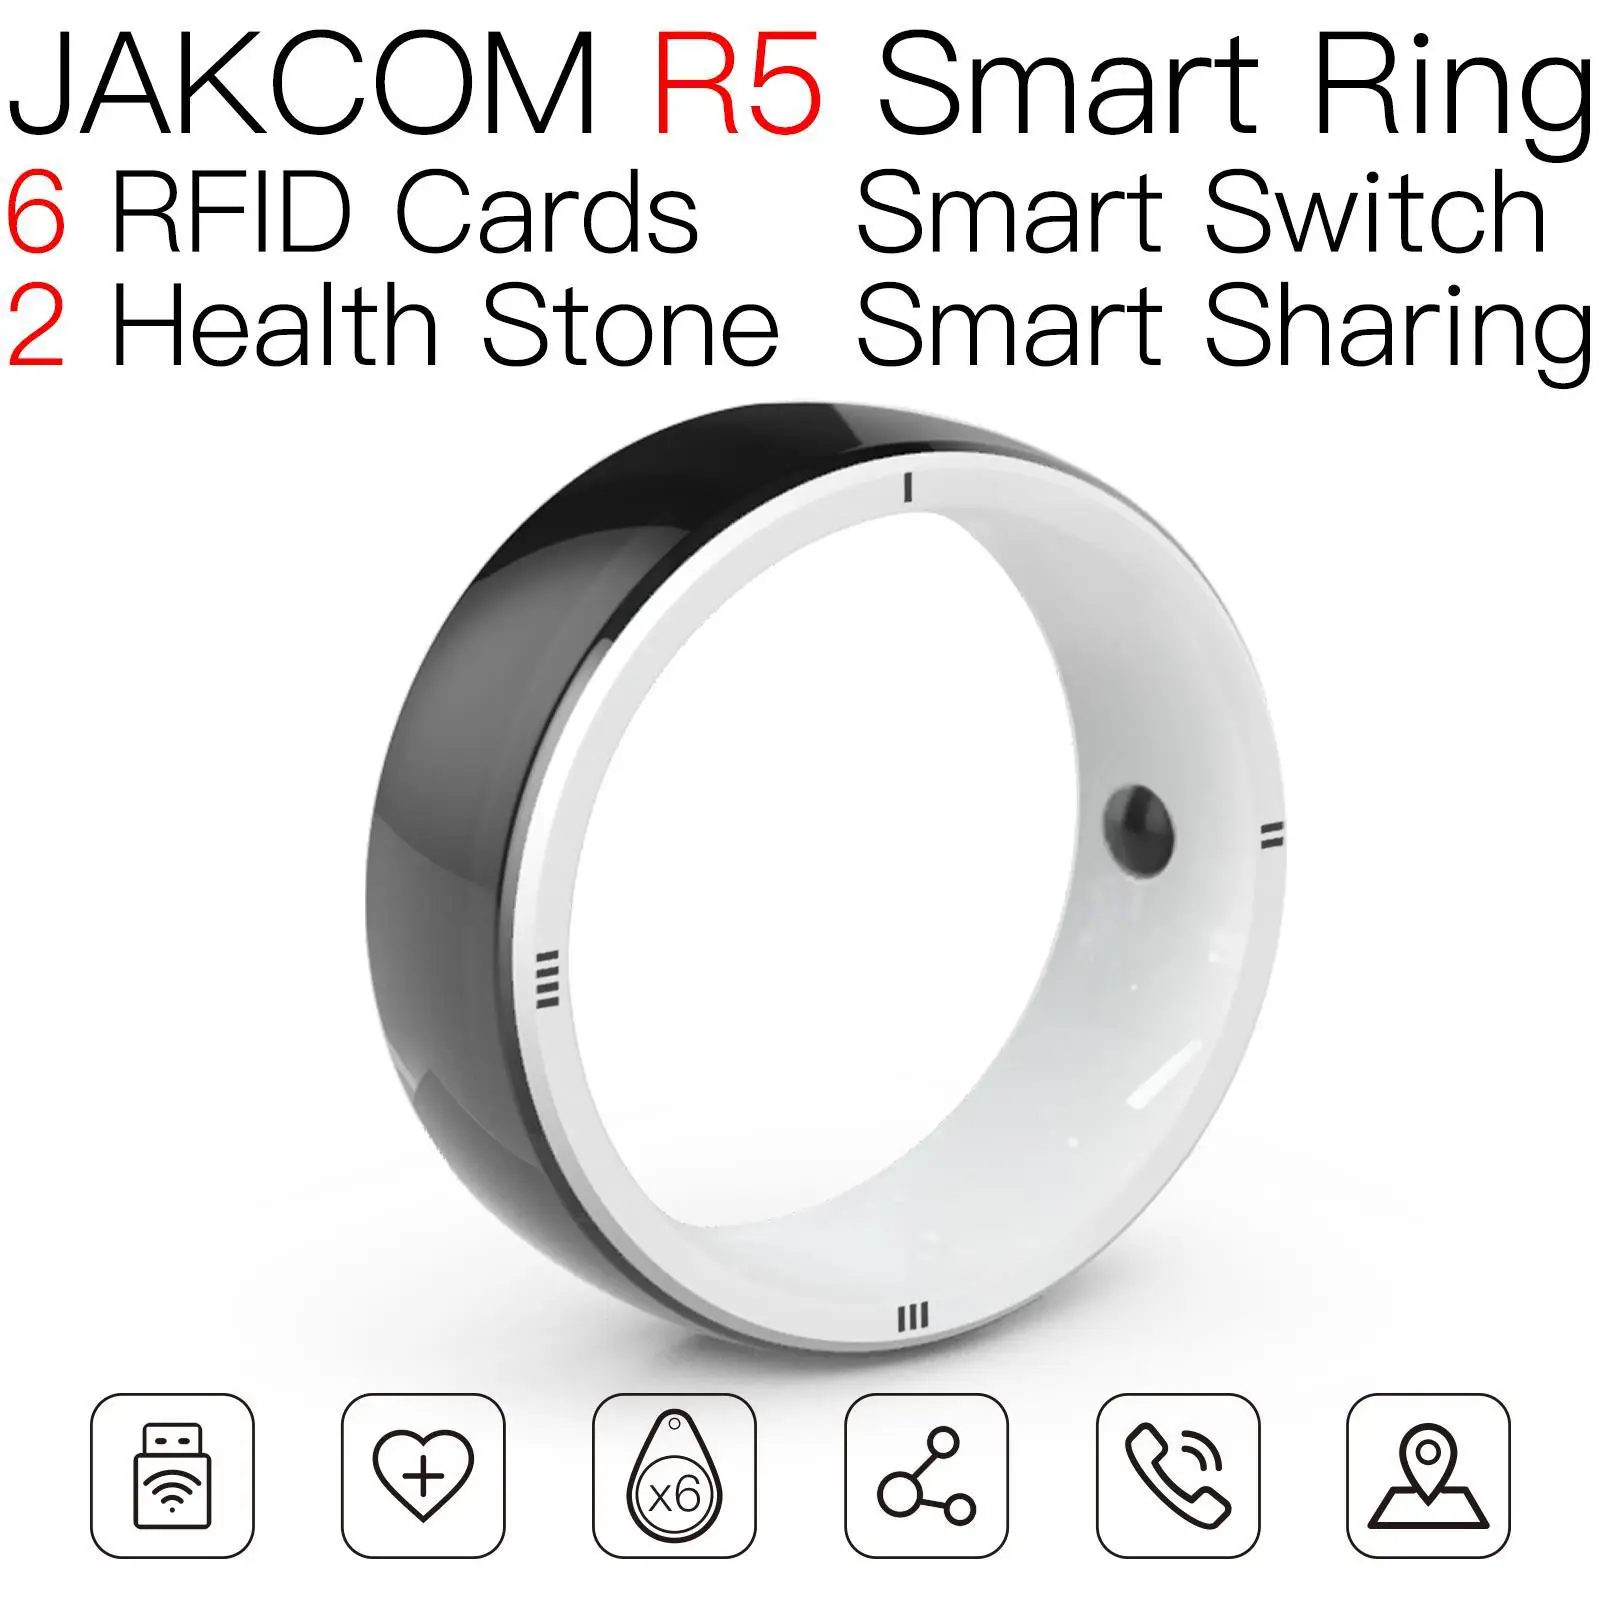 JAKCOM R5 Smart Ring jobb, mint az Office 365 licenckulcs italiano illimitata deauther watch emv chip nfc tag 215 case 100 adet - 0